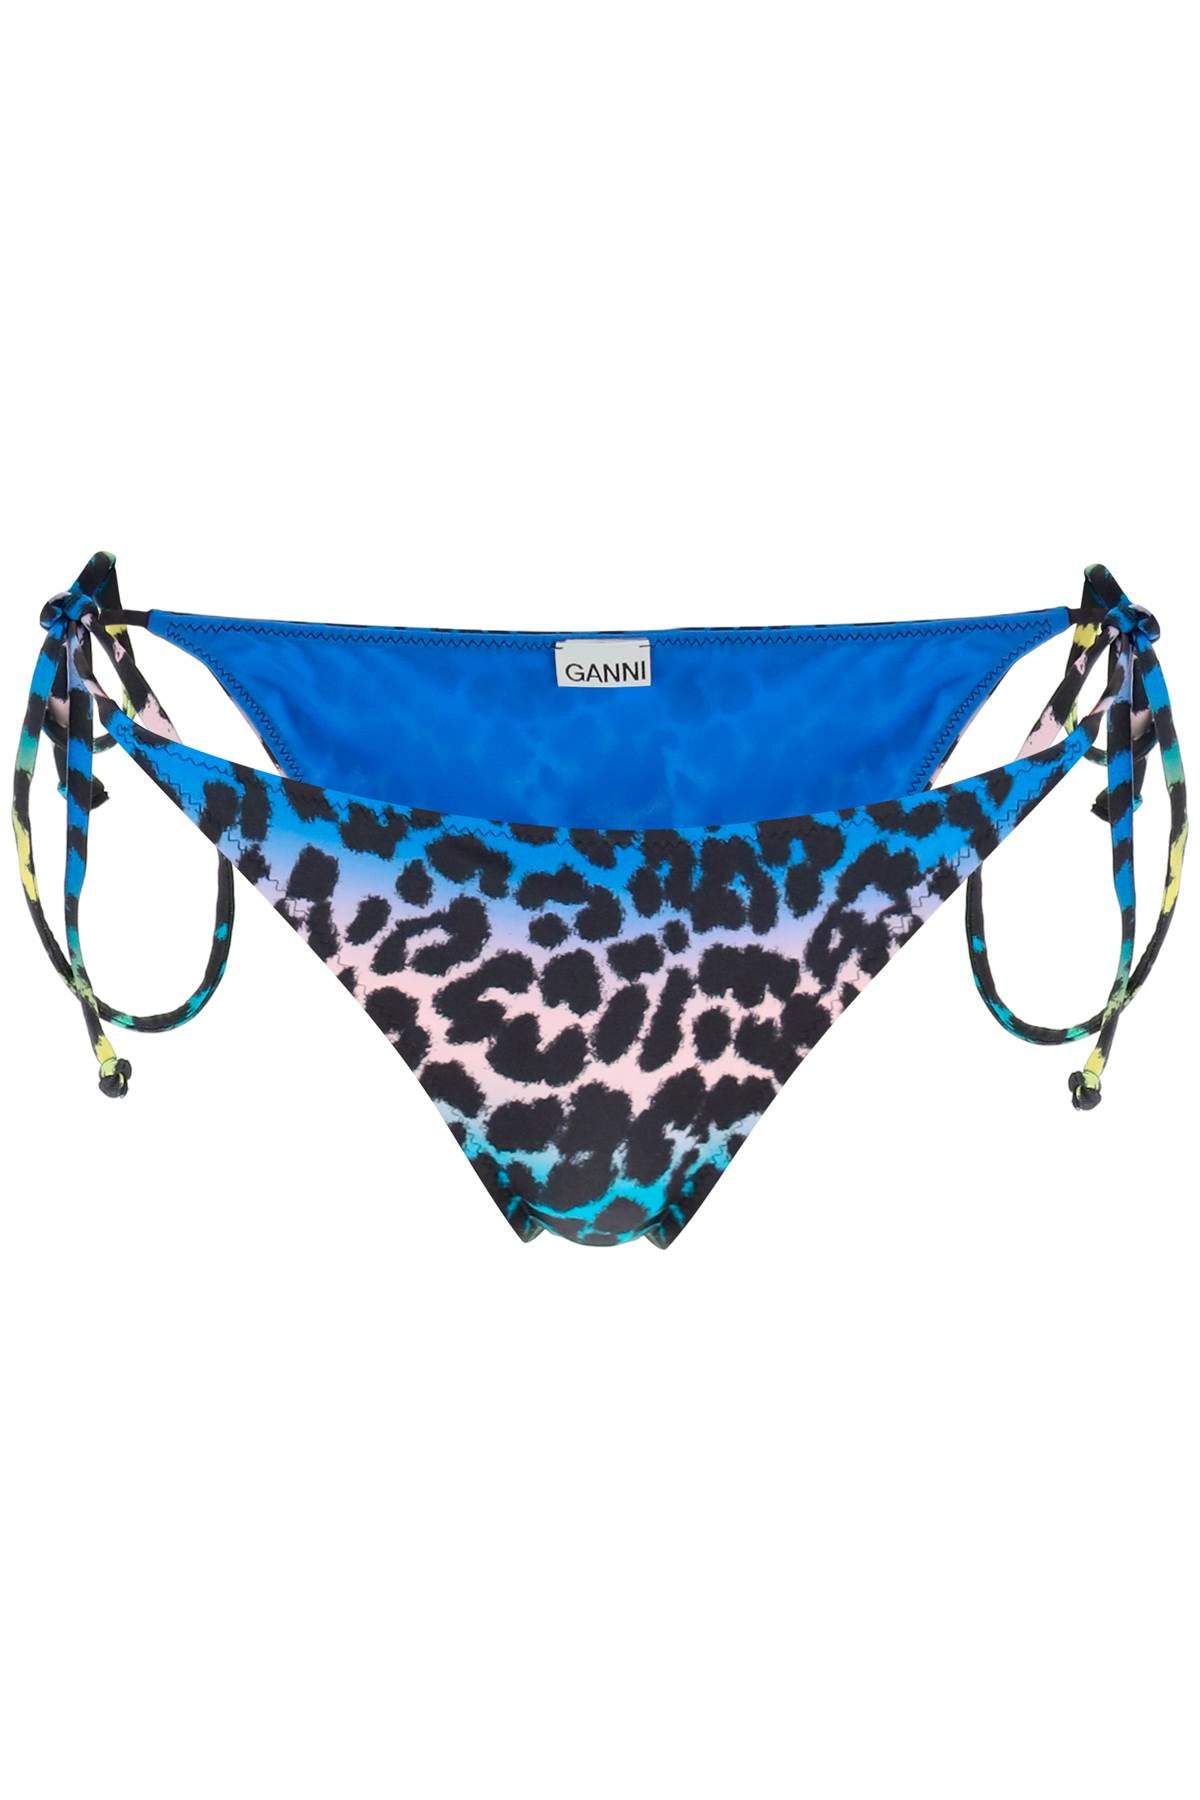 Ganni Econyl Bikini Bottom - 36 Multicolor